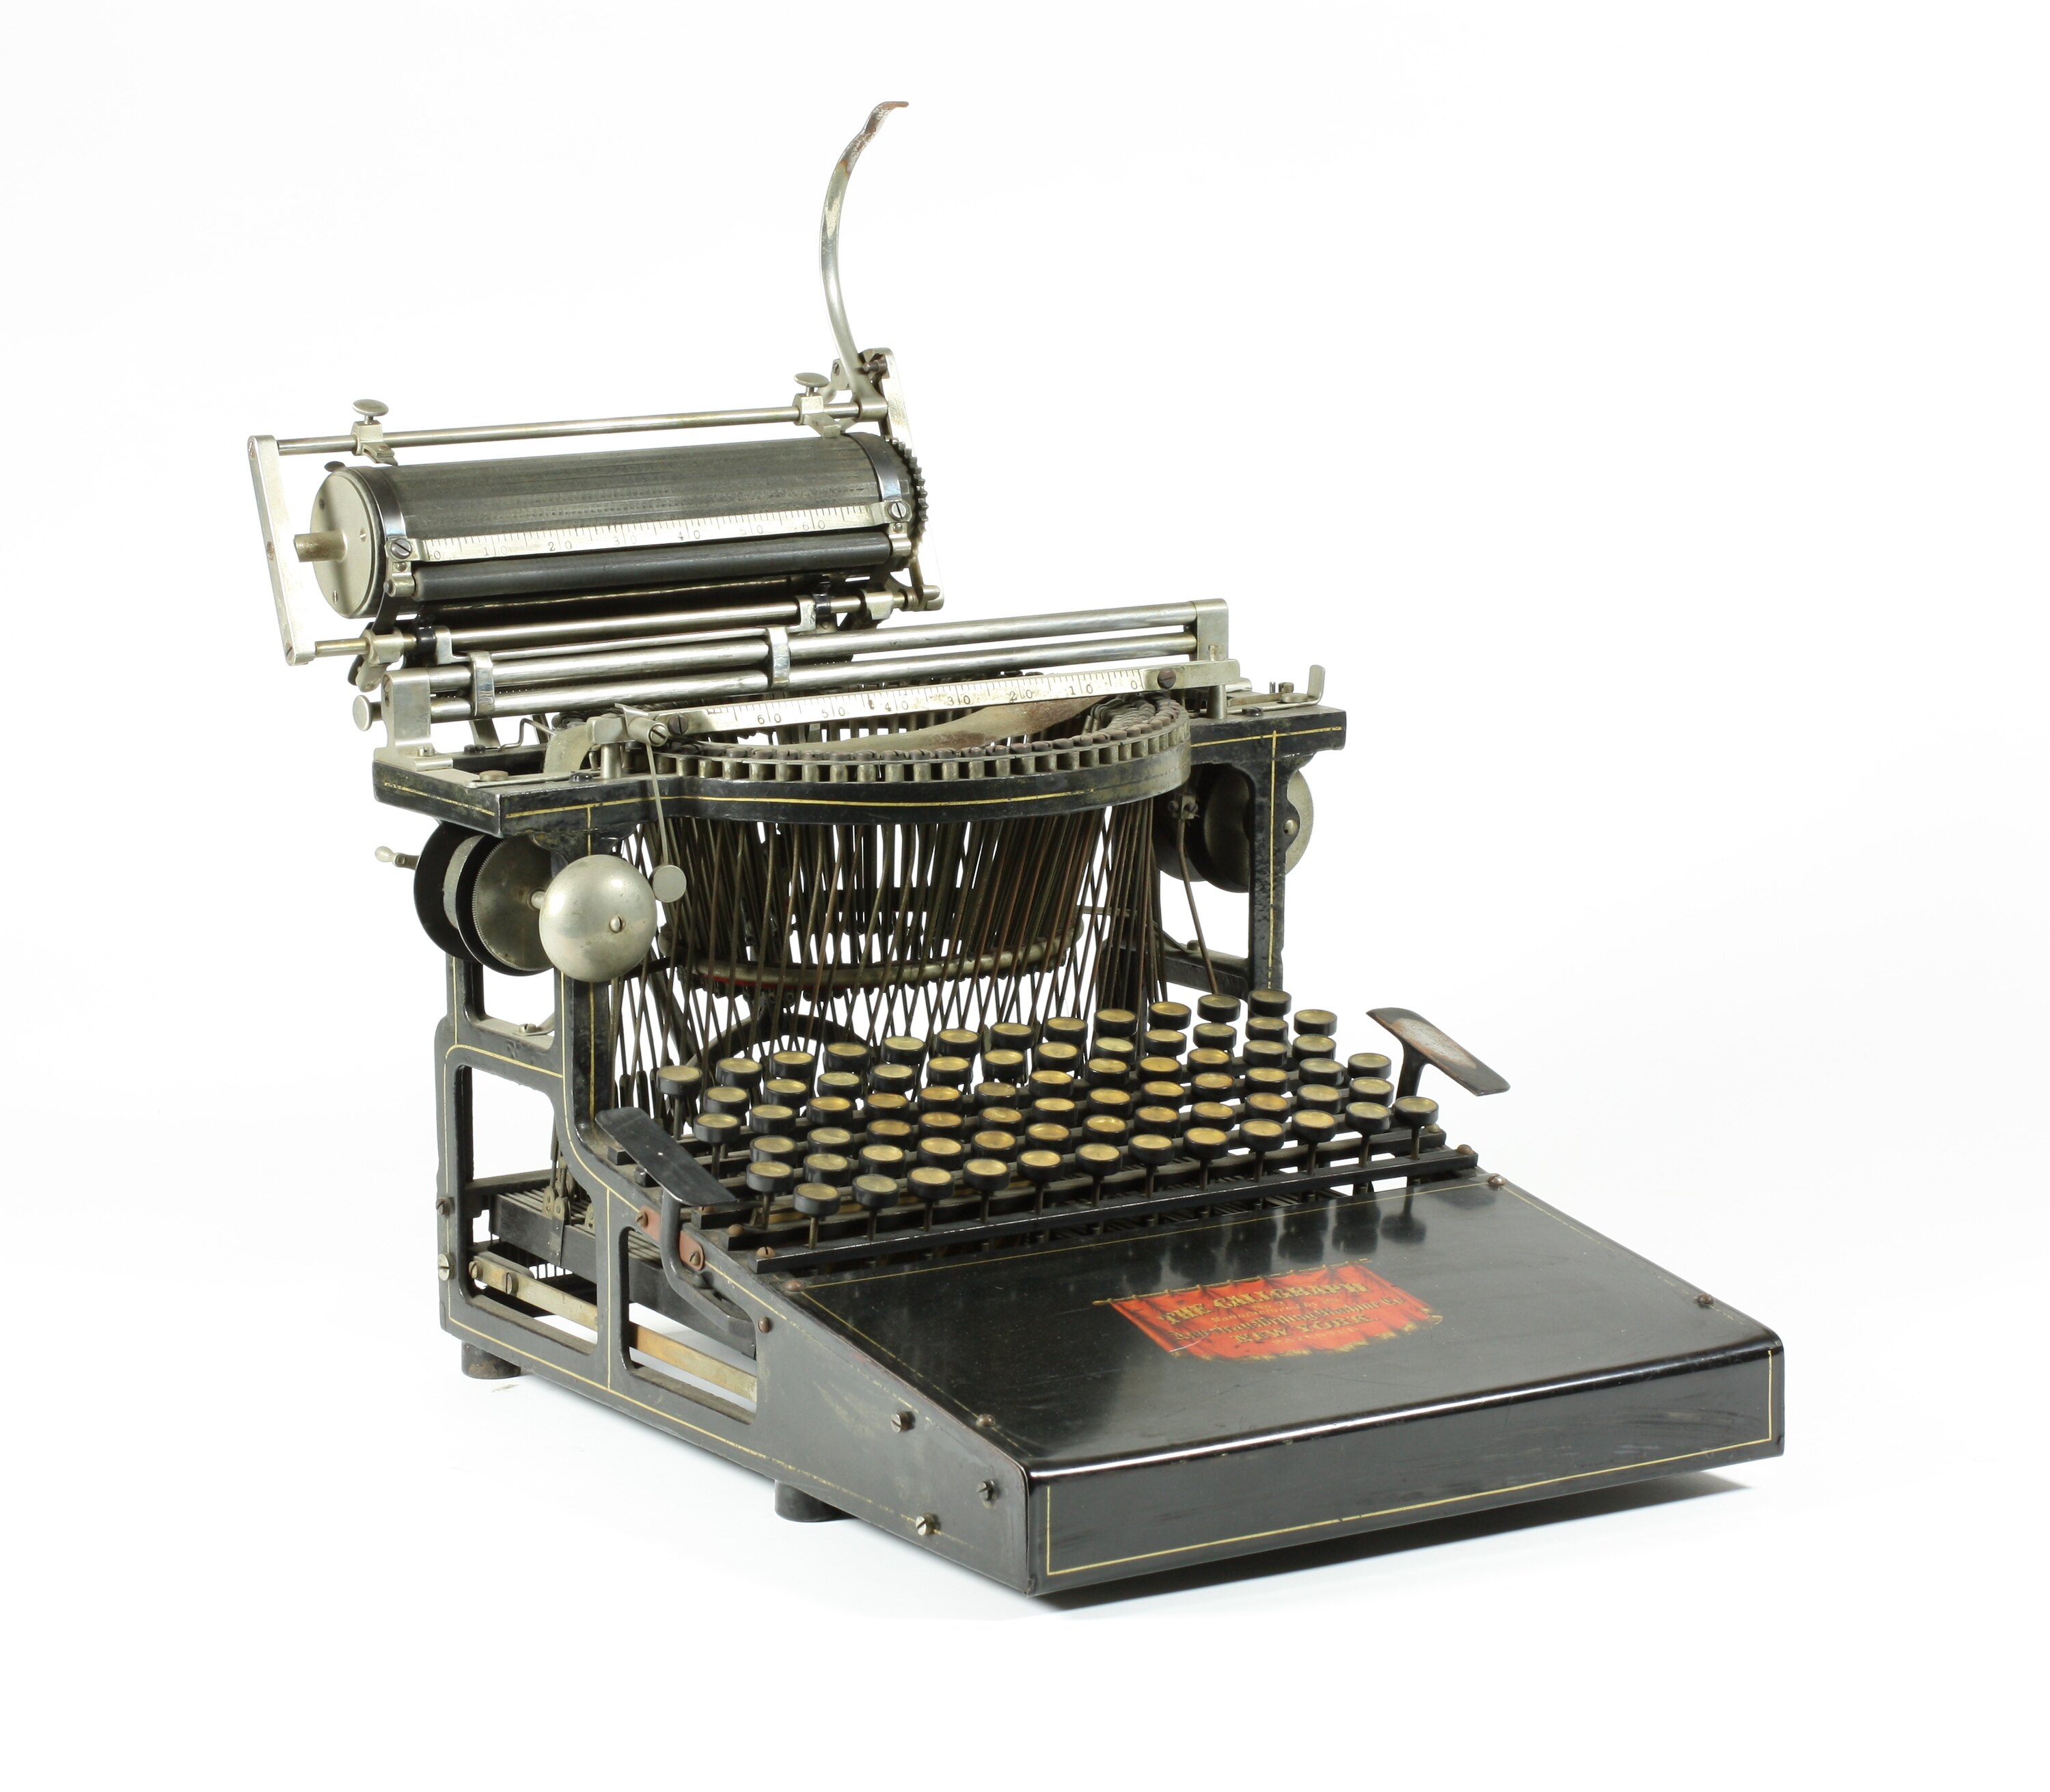 1885 Ad Antique Caligraph Typewriter American Writing Machine Co. Corr –  Period Paper Historic Art LLC